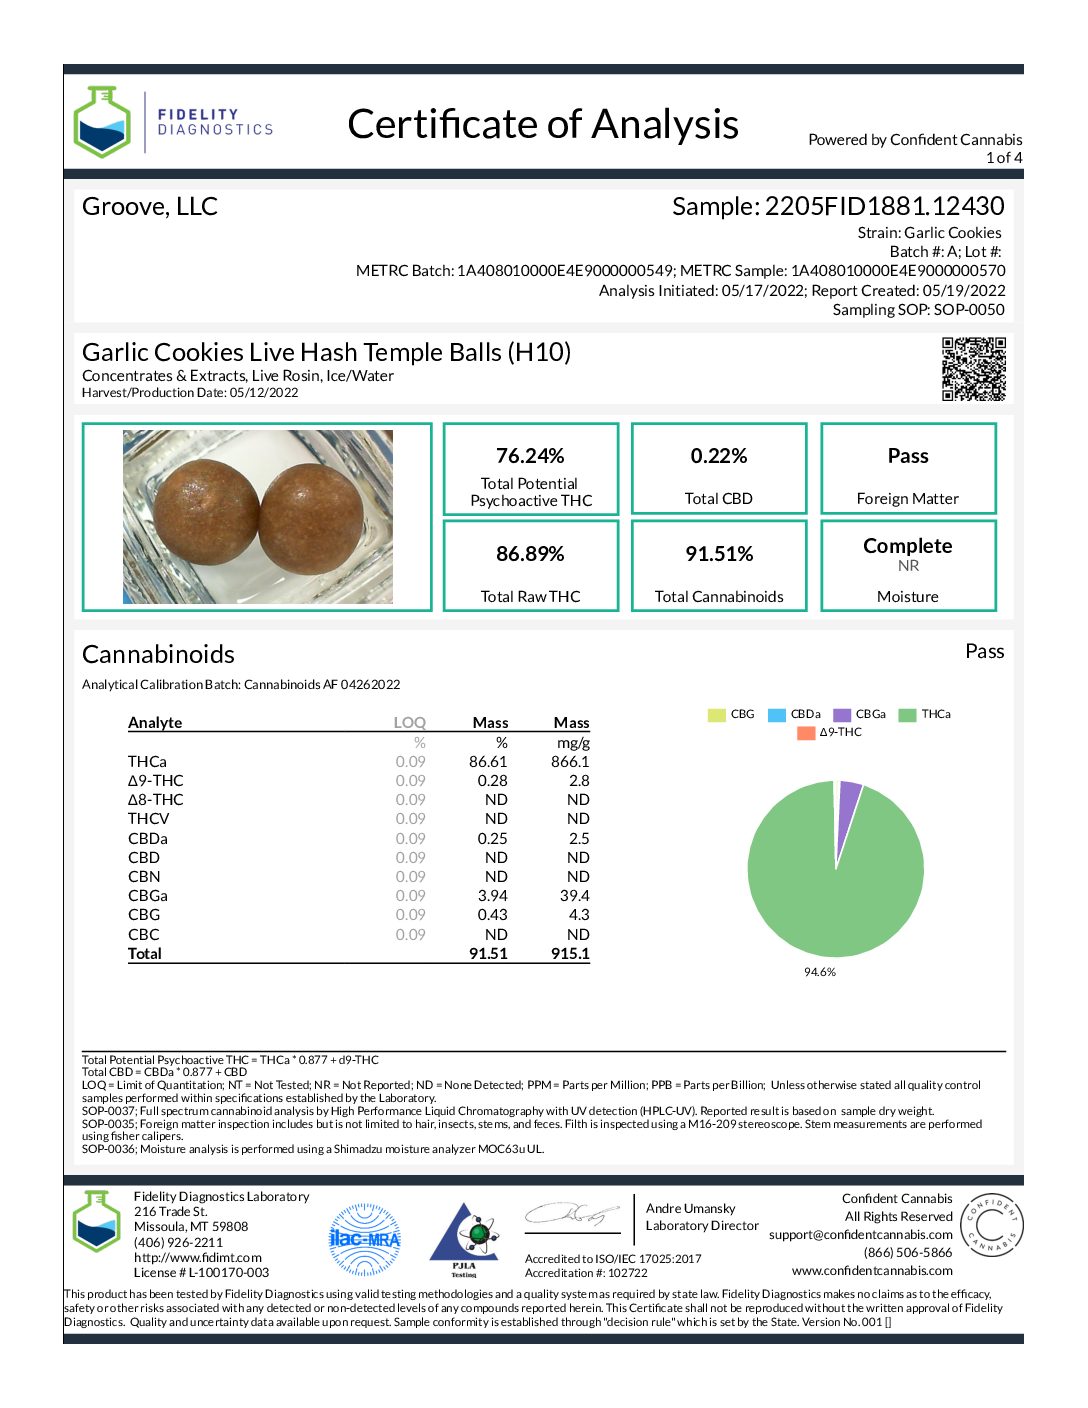 https://groovesolventless.com/wp-content/uploads/2022/05/Garlic-Cookies-Live-Hash-Temple-Balls-H10-pdf.jpg